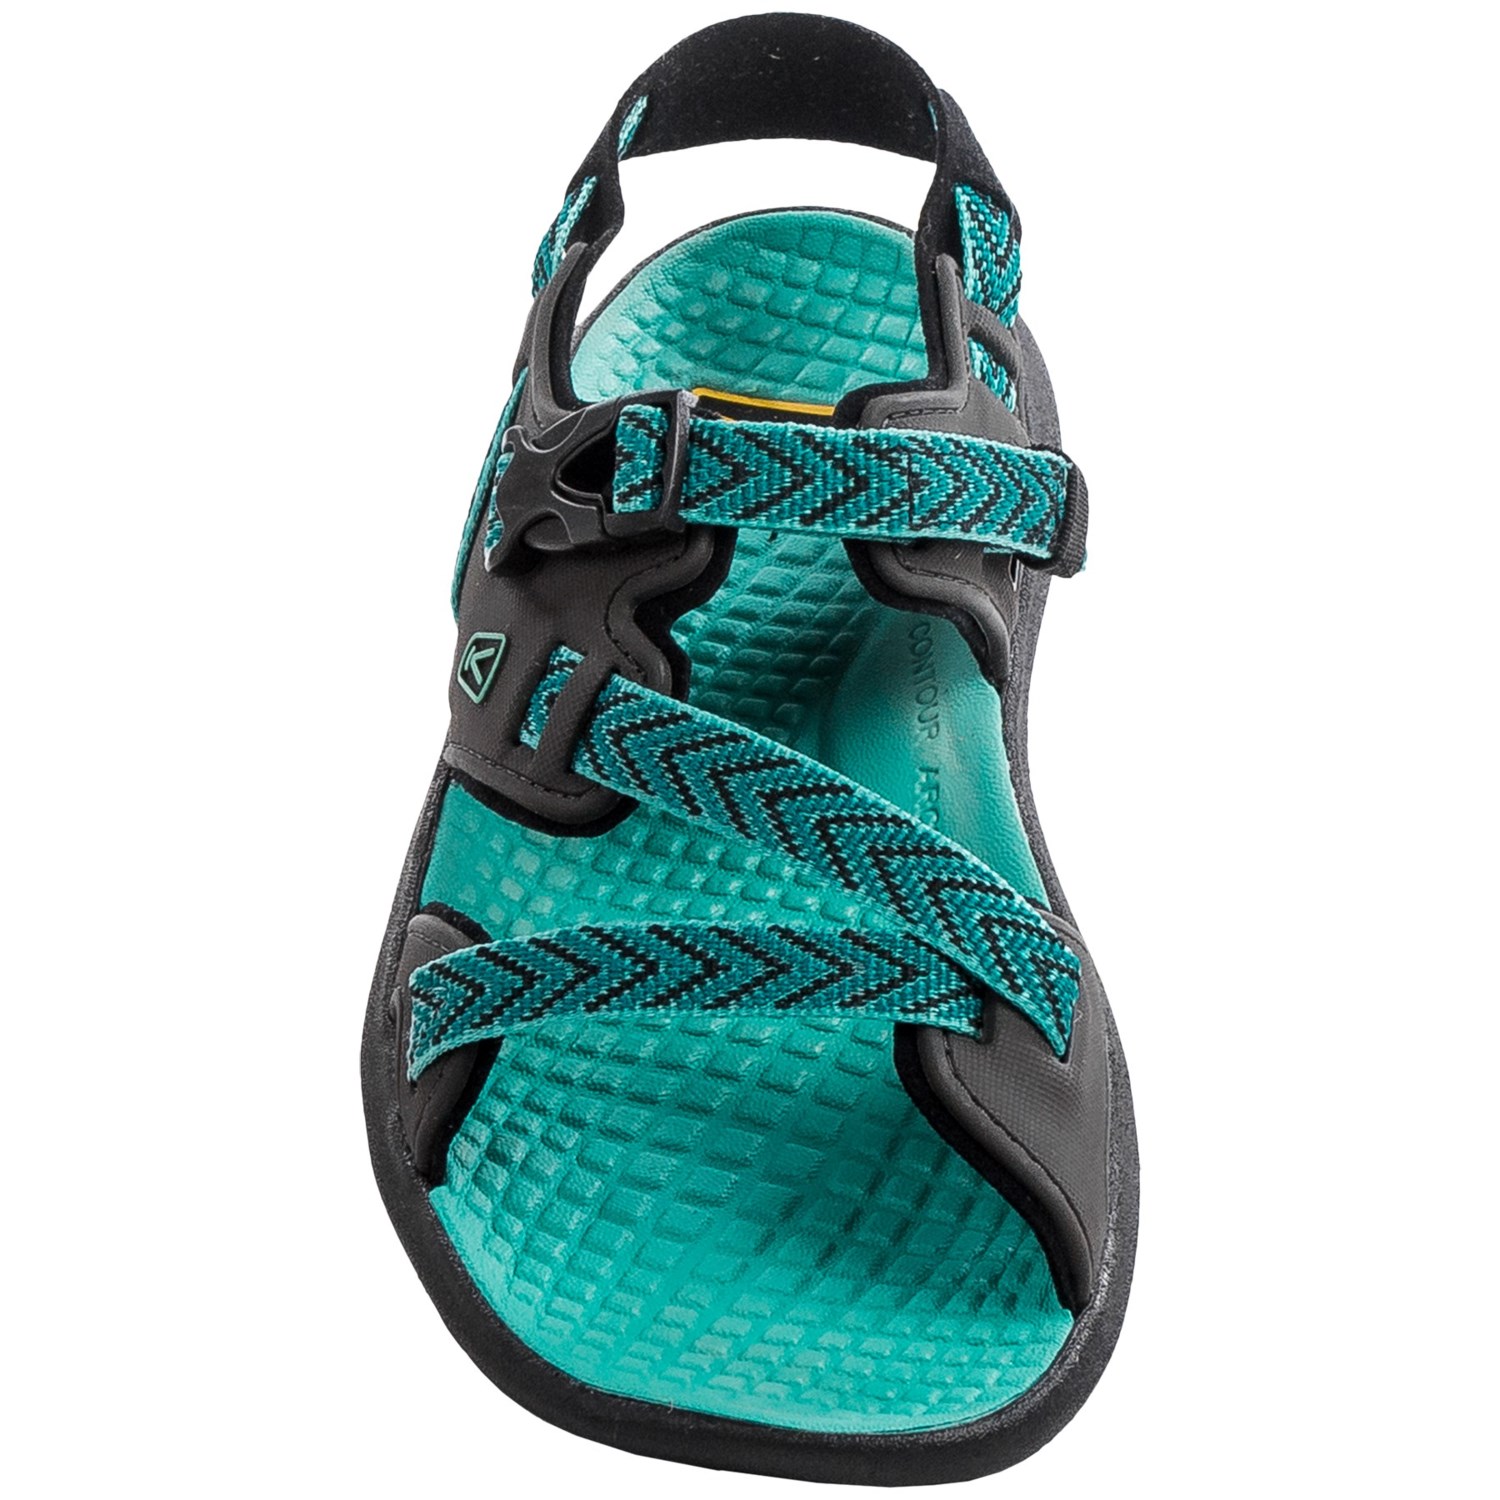 Keen Maupin Sport Sandals (For Women) - Save 68%